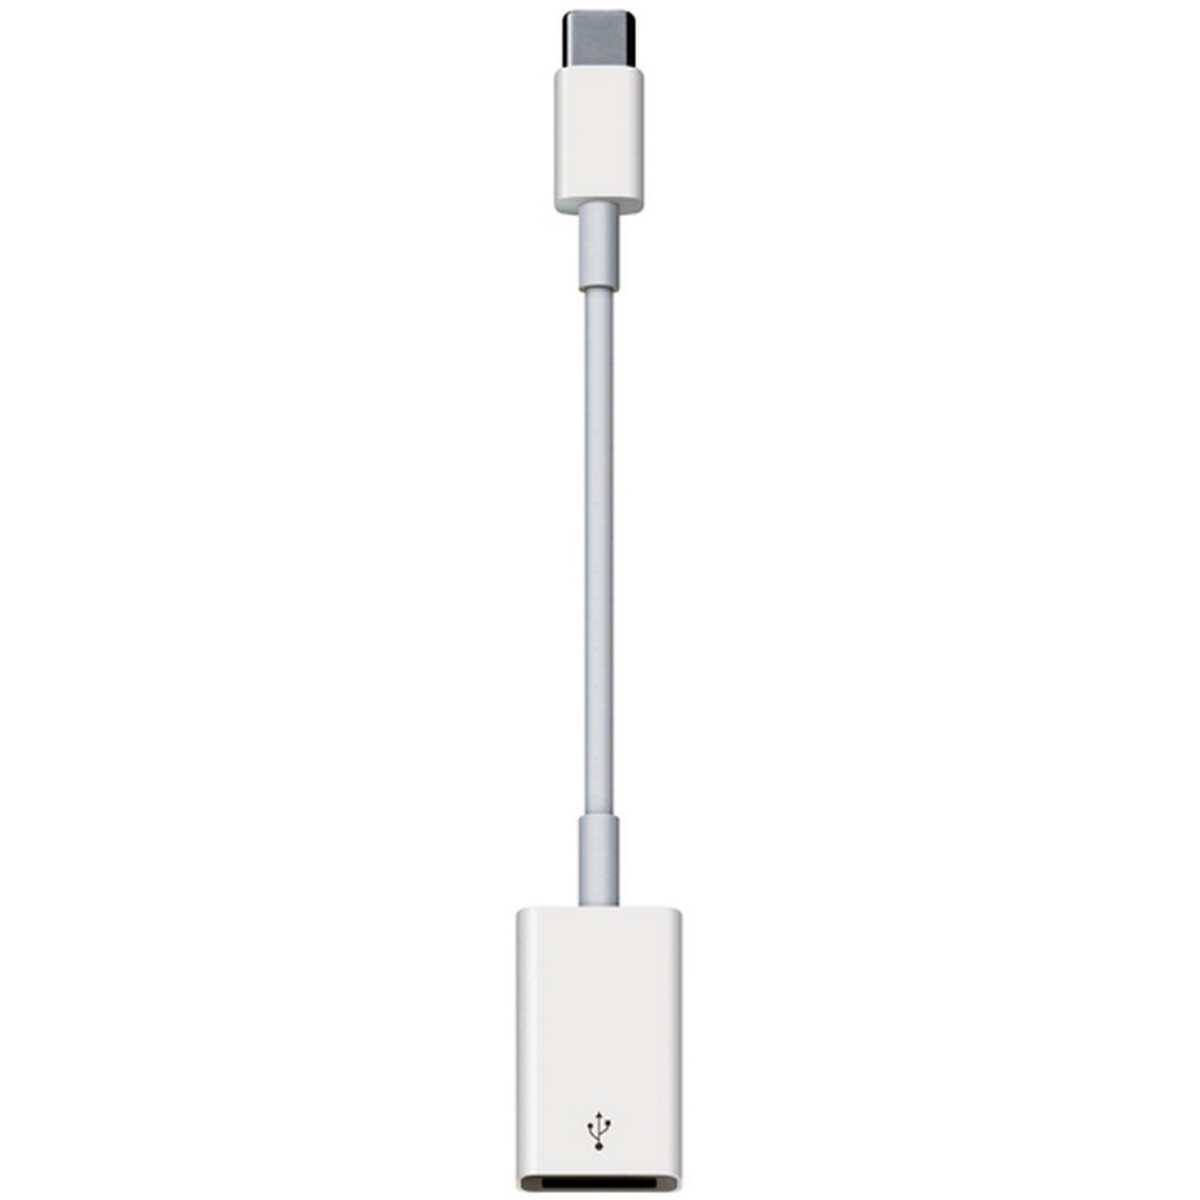 Apple USB-C to USB Adapter MJ1M2Z